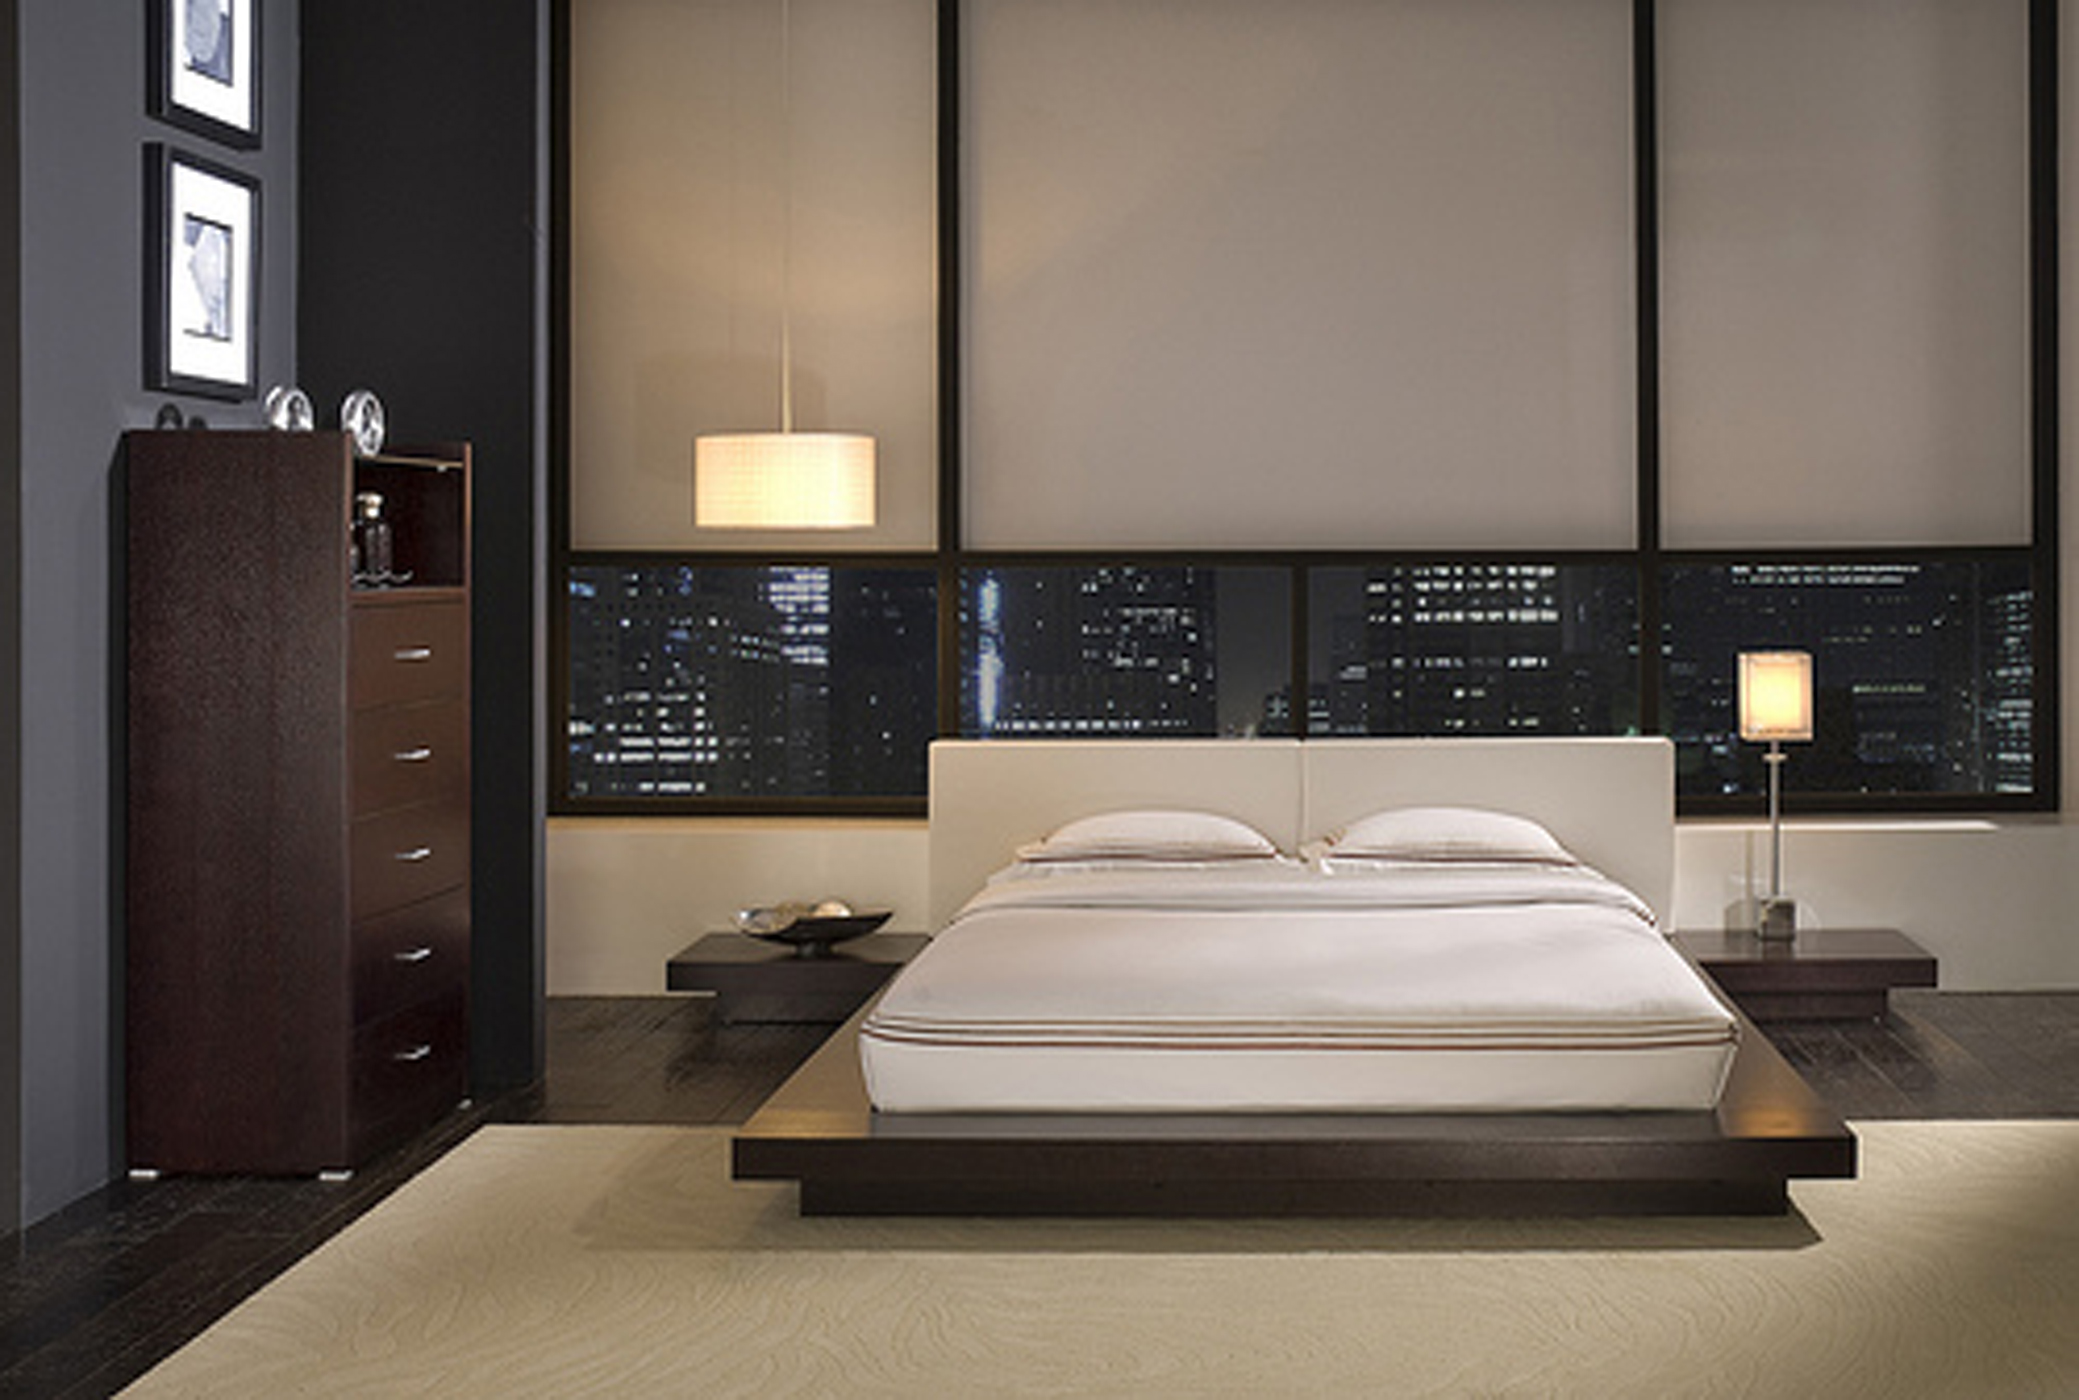 Bedroom-interior-design-as-modern-bedroom-furniture-with-artistic-design-ideas-for-Bedroom-ideas-50